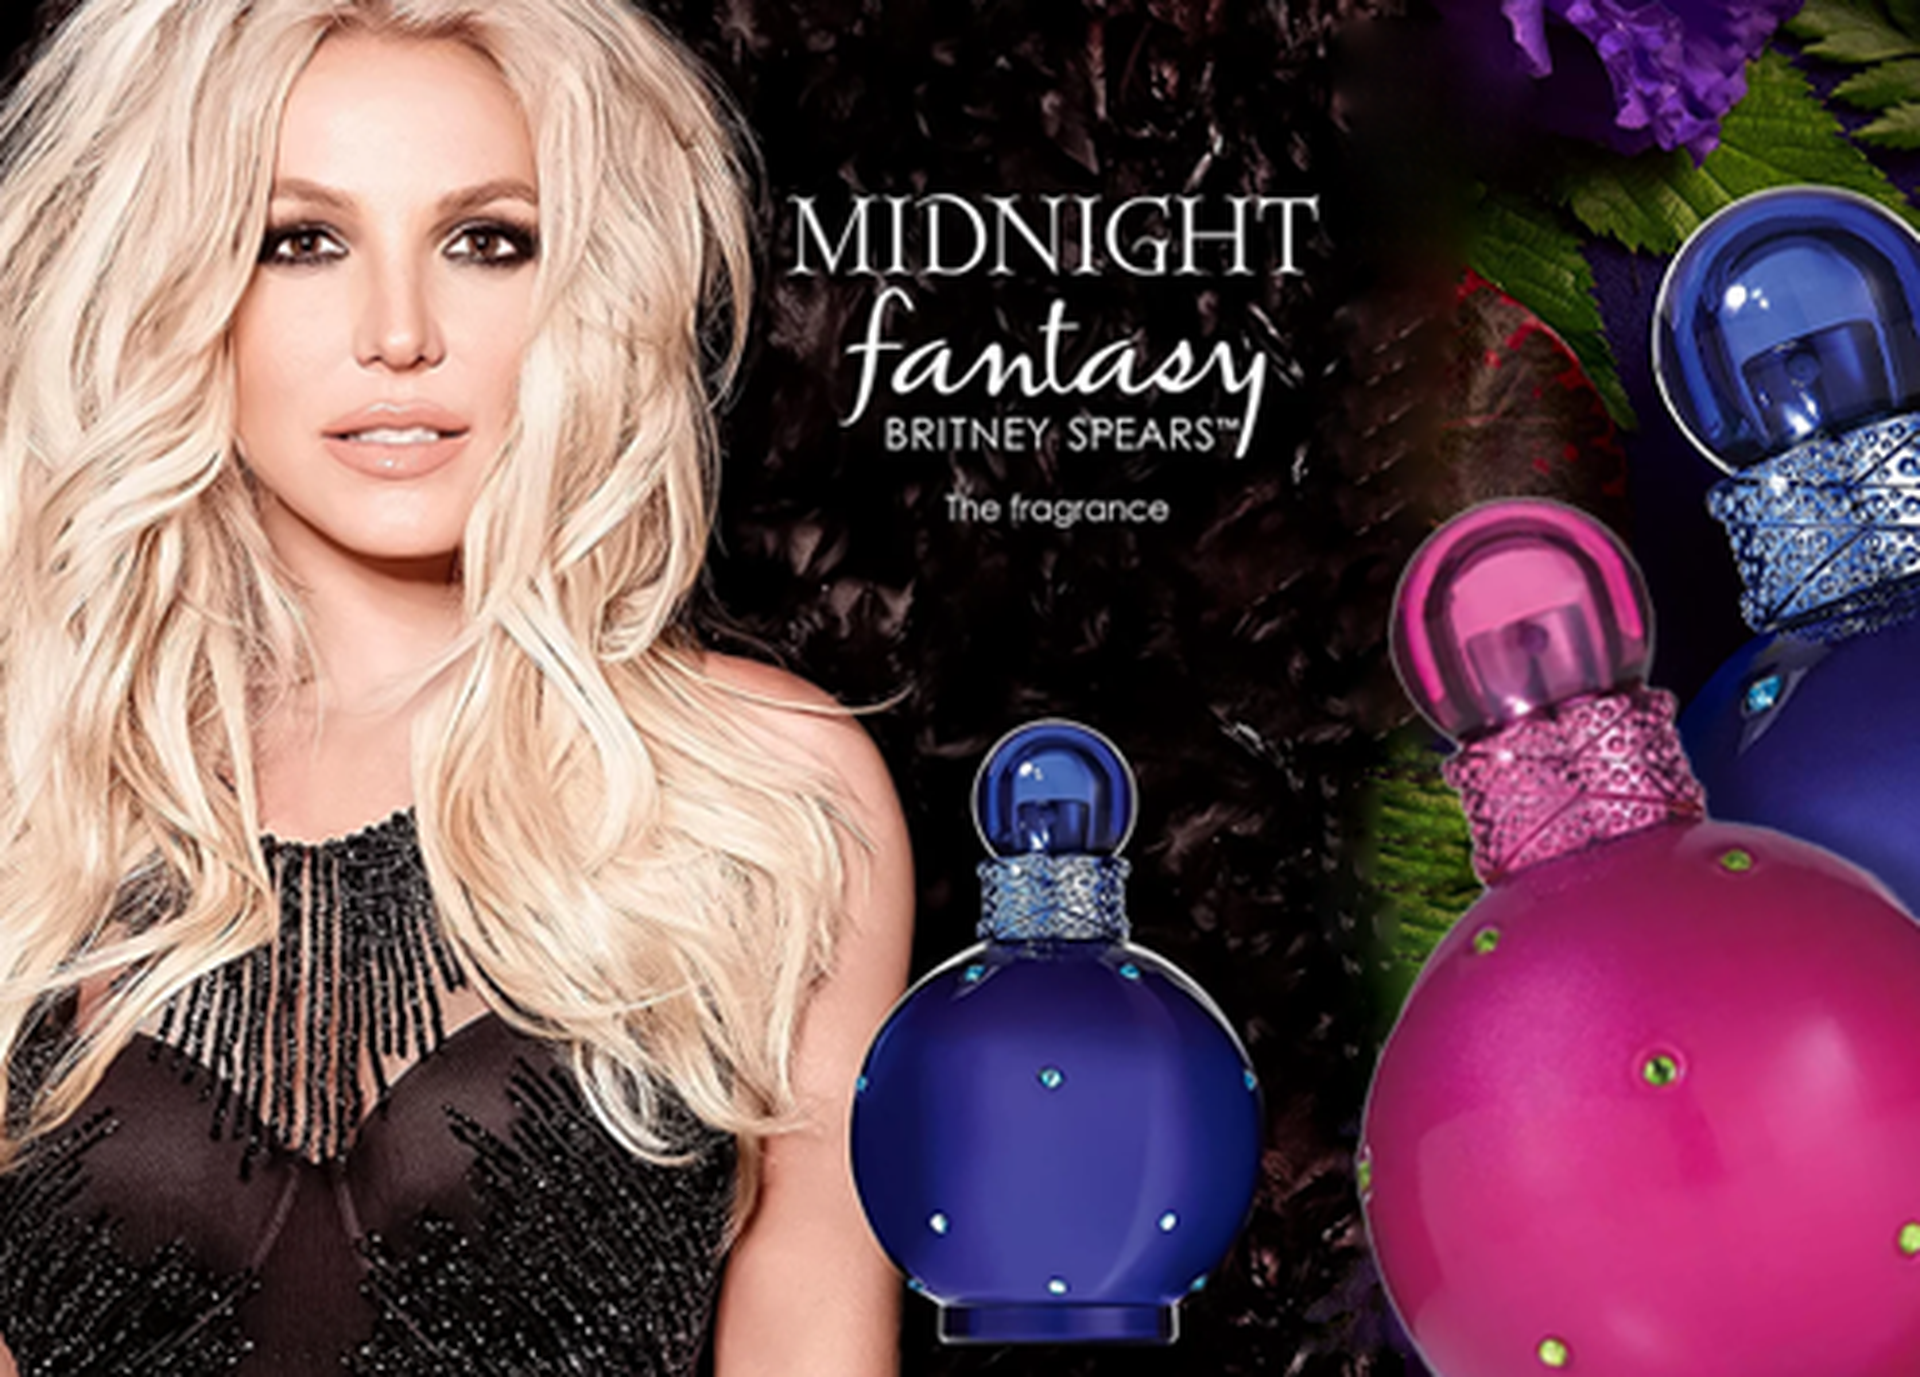 Fantasy Britney Spears Perfume Feminino Eau de Toilette 30ml - DOLCE VITA